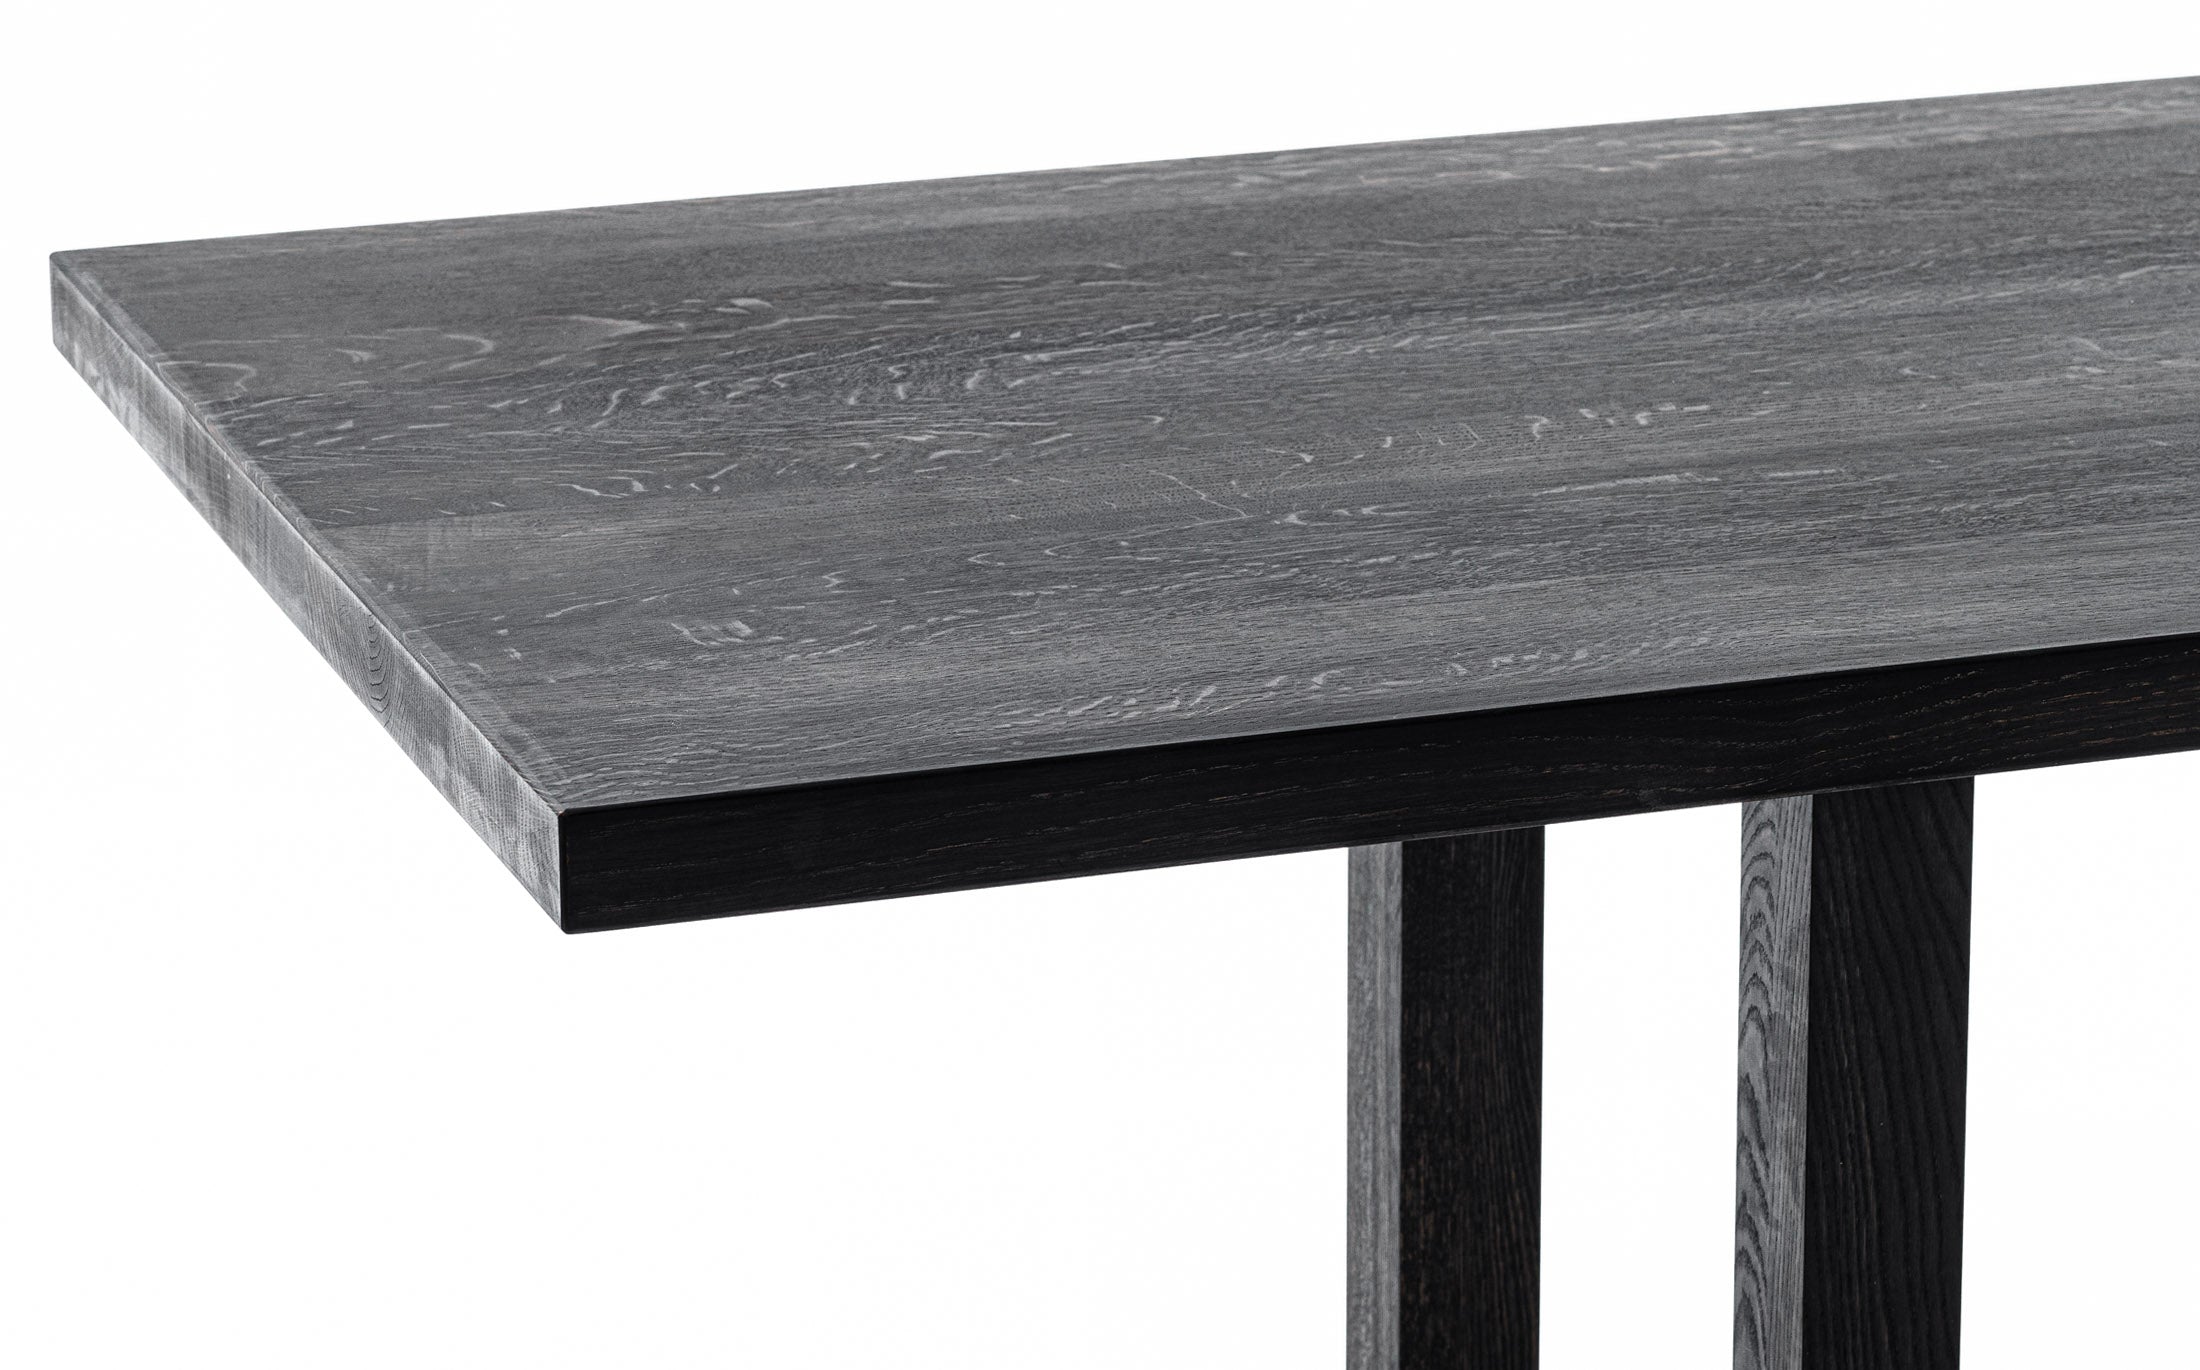 Atelier Zumthor working table - Square legs #Wood Finish_tannin black